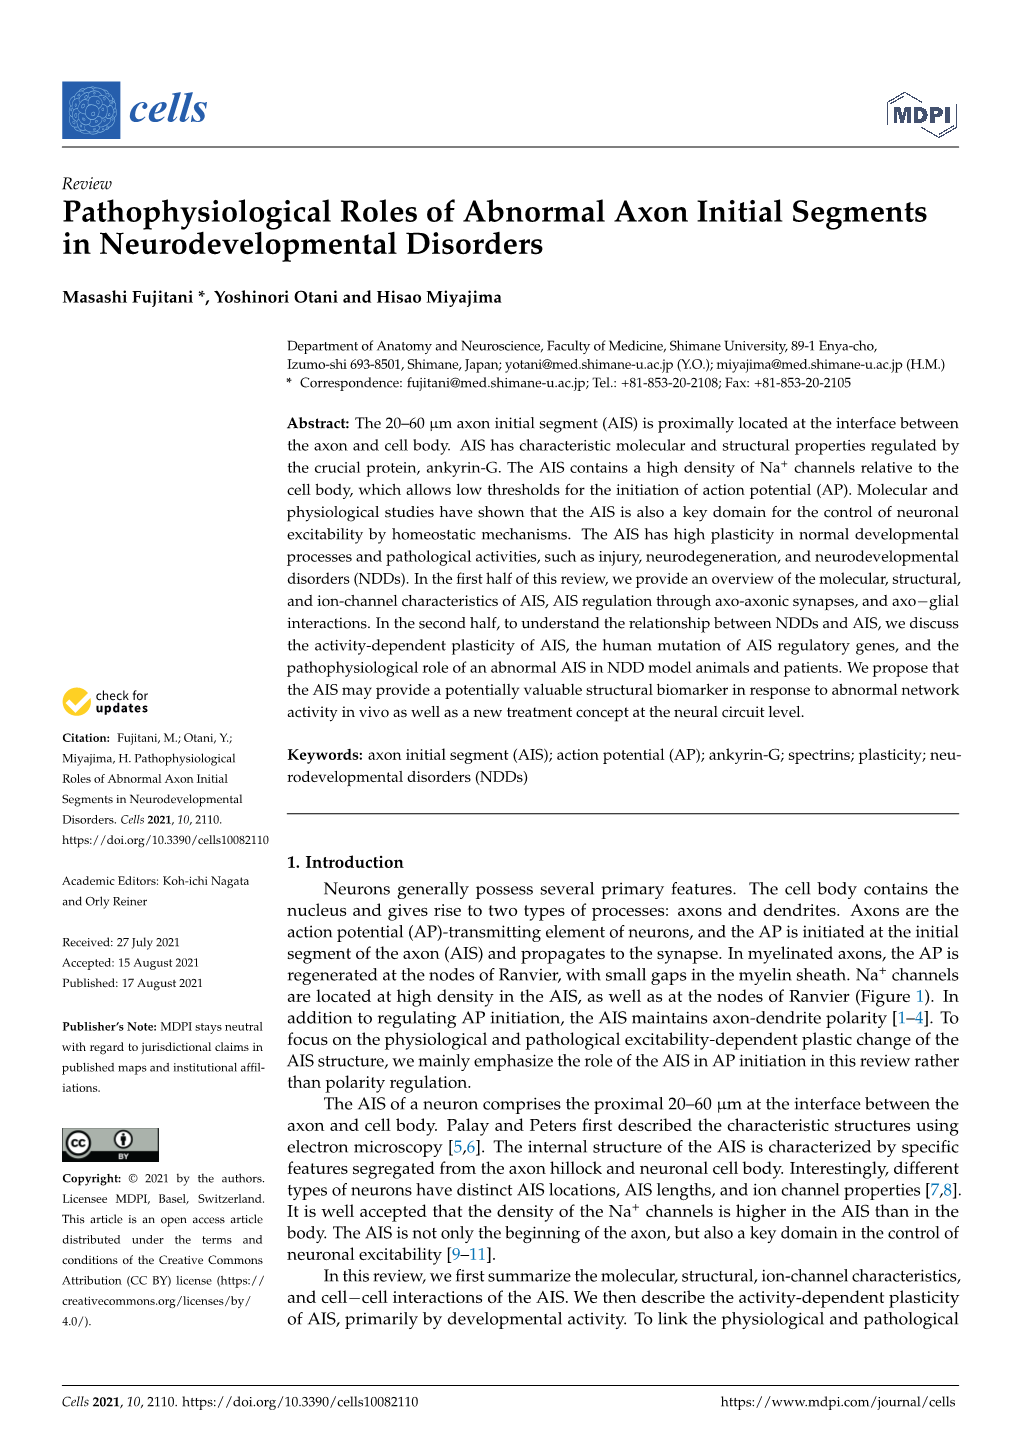 Pathophysiological Roles of Abnormal Axon Initial Segments in Neurodevelopmental Disorders